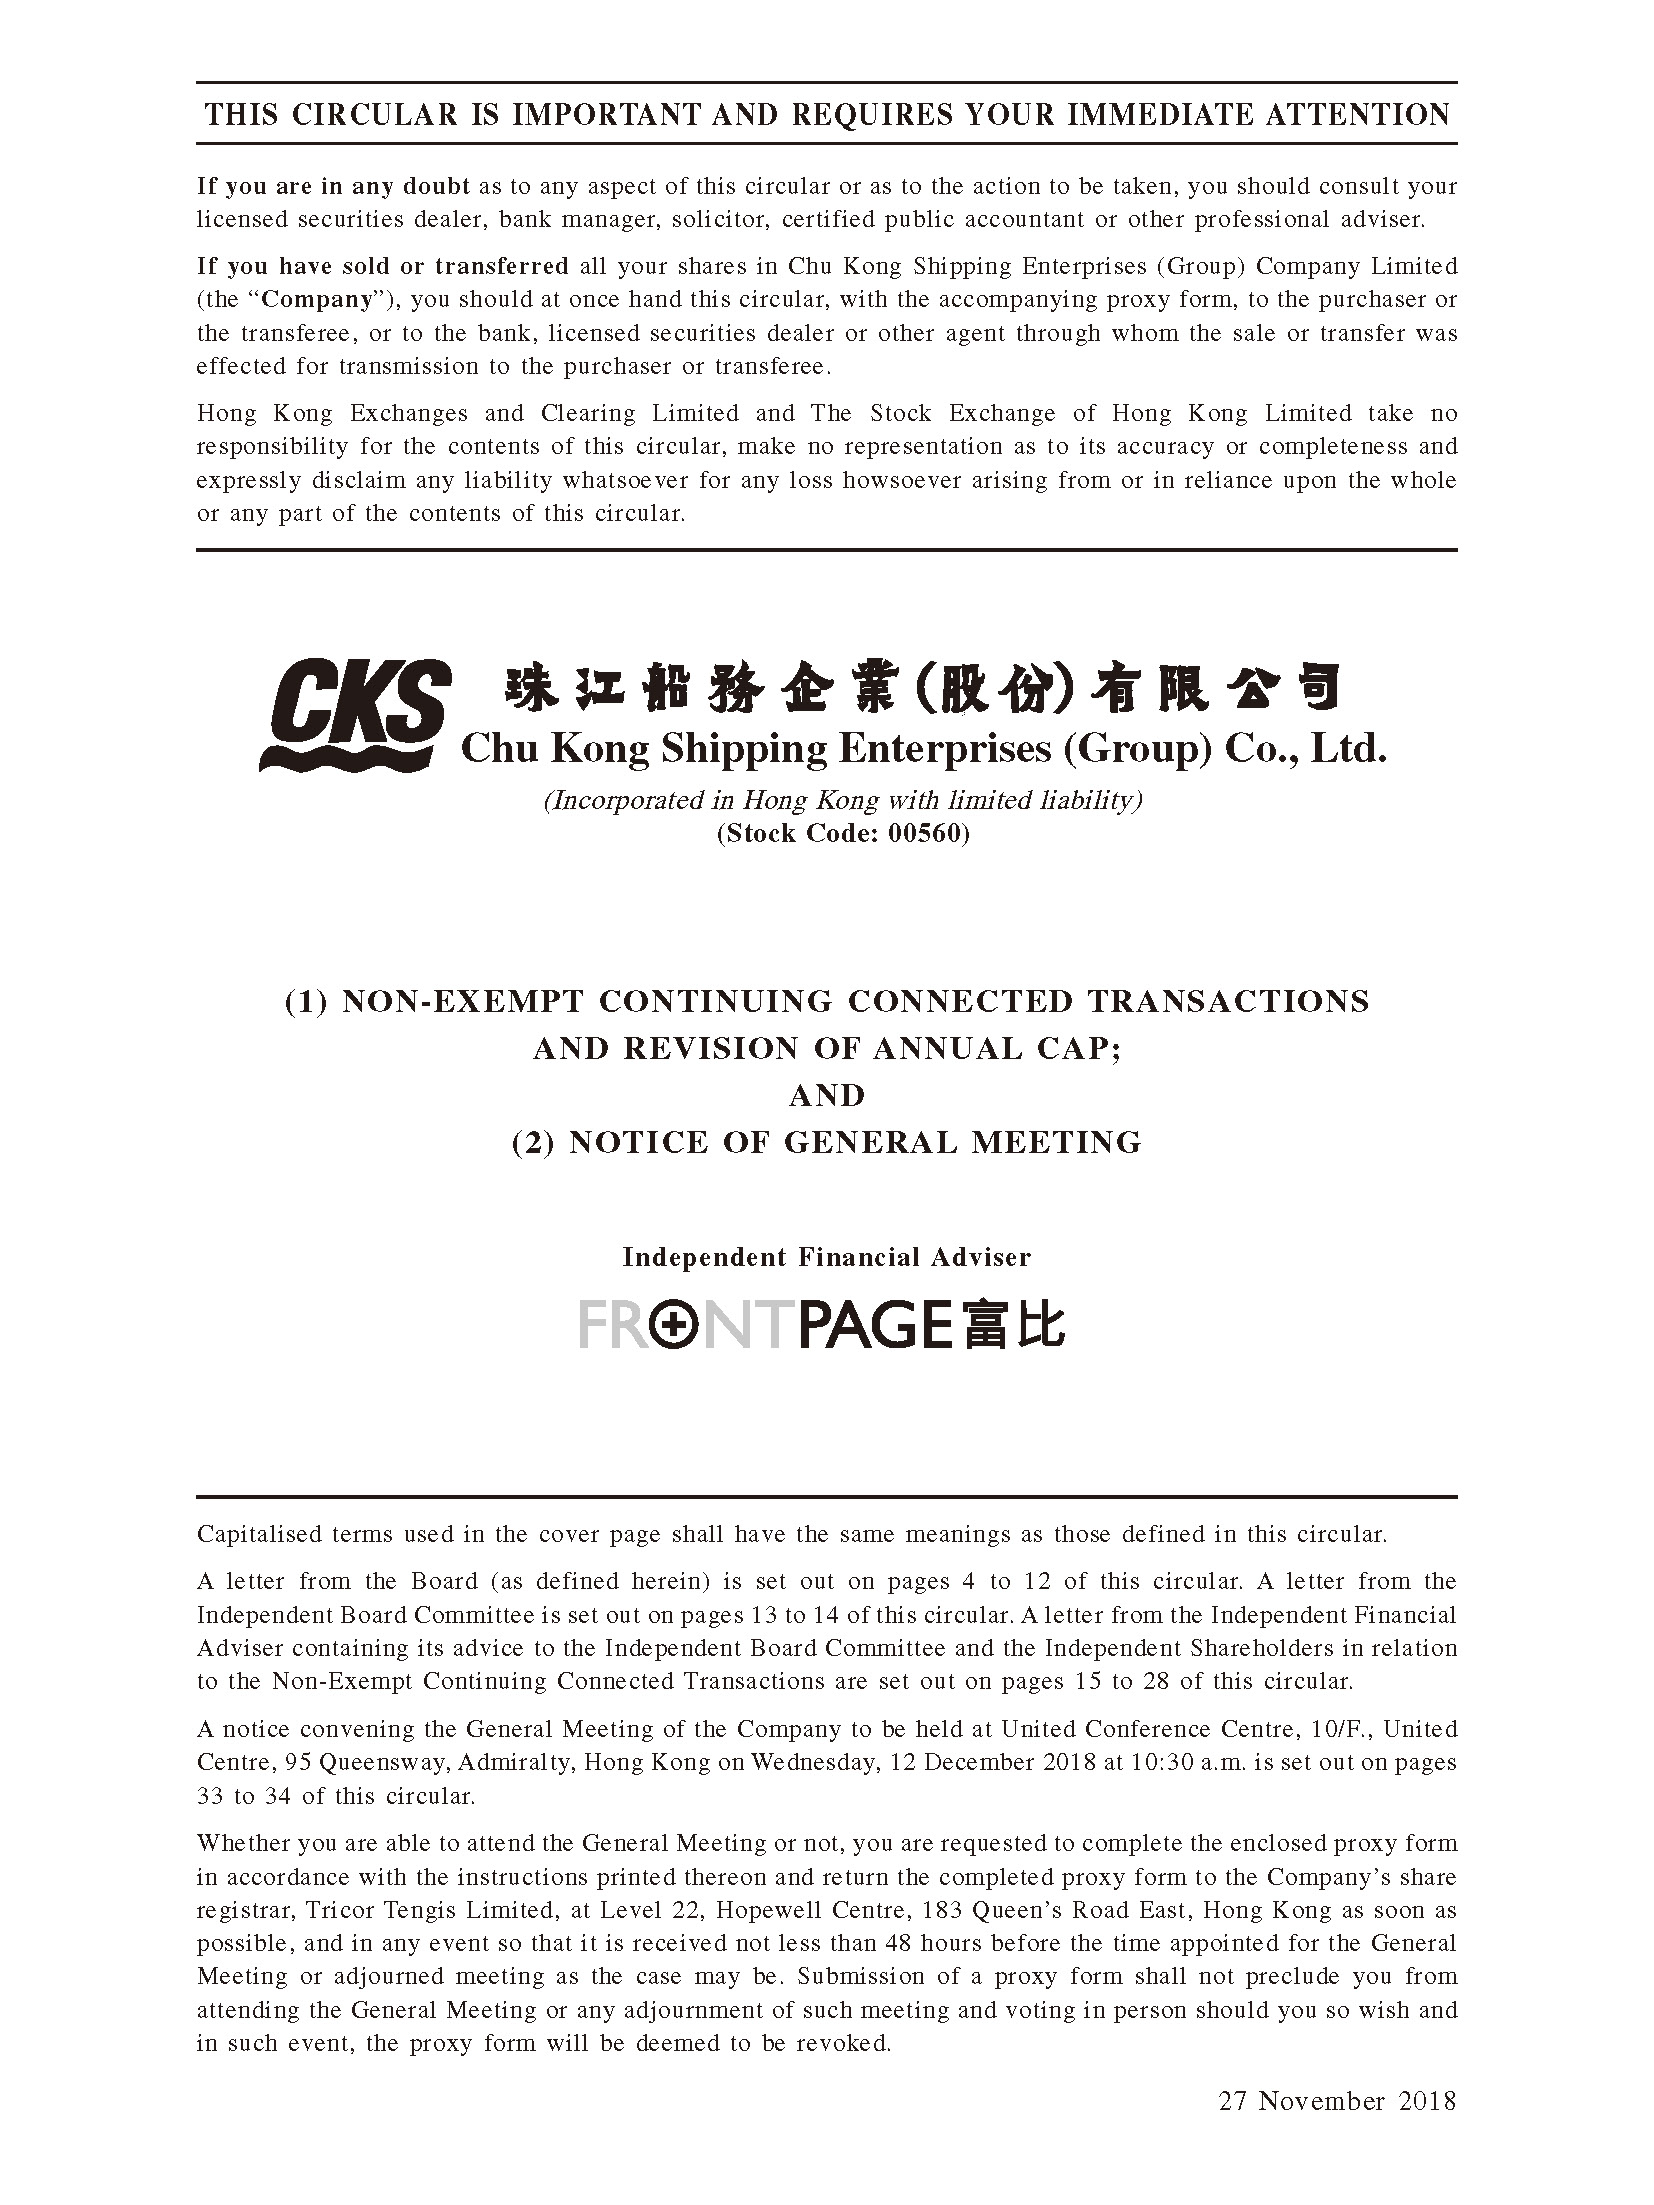 Chu Kong Shipping Enterprises (Group) Co., Ltd.